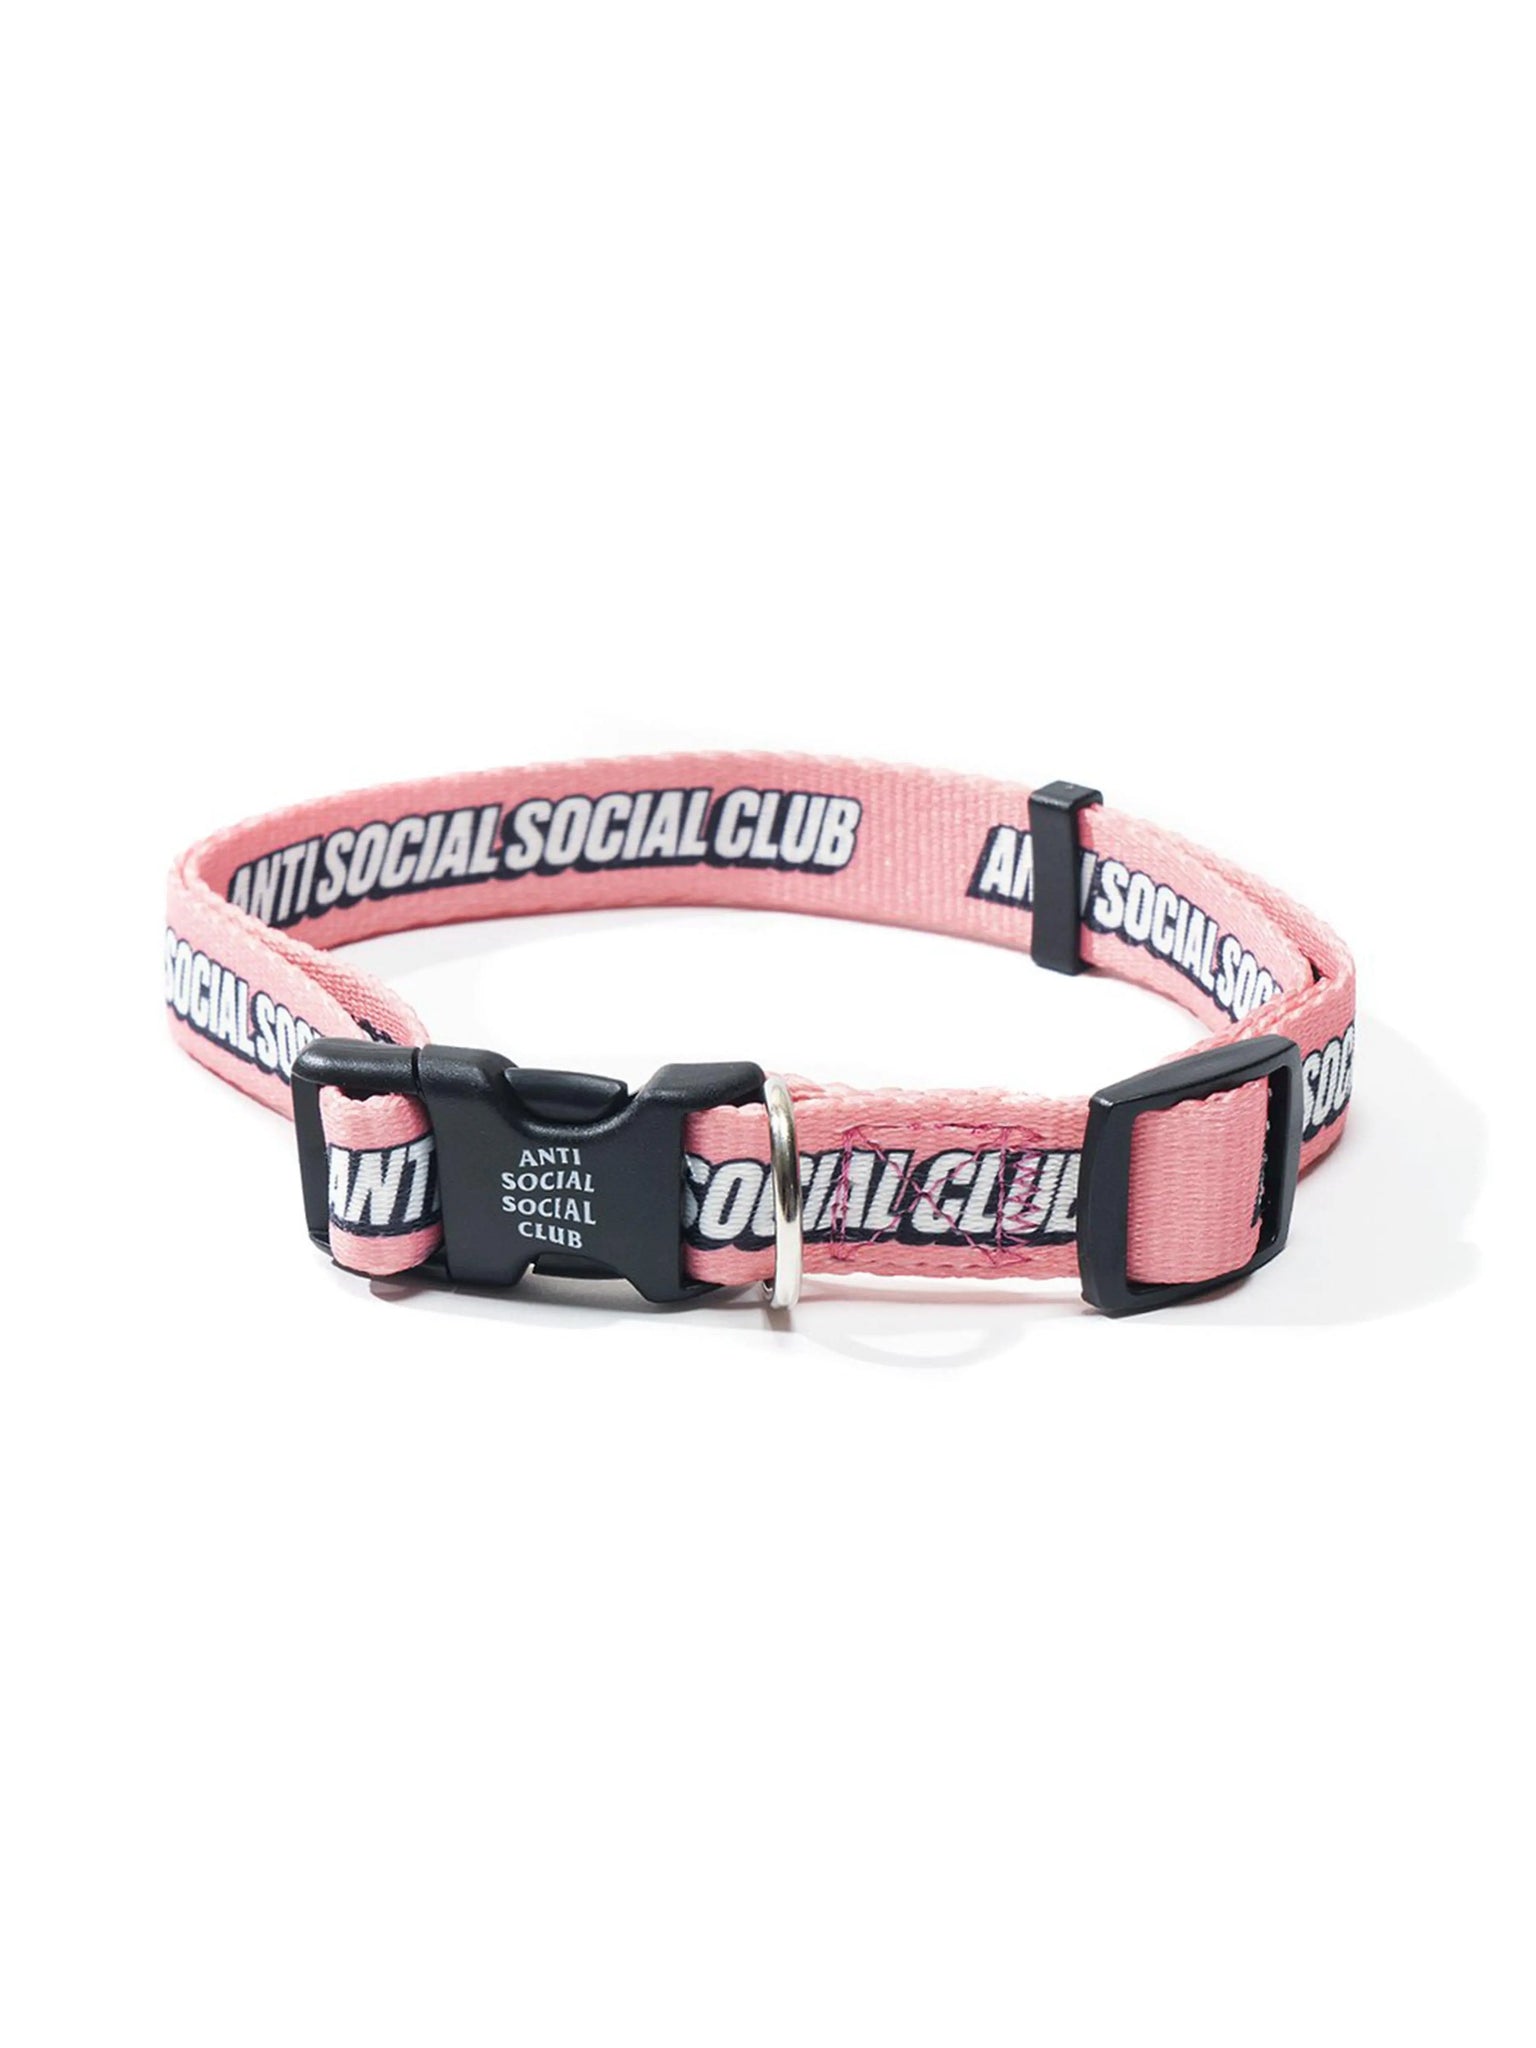 Anti Social Social Club Dog Collar & Leash Prior